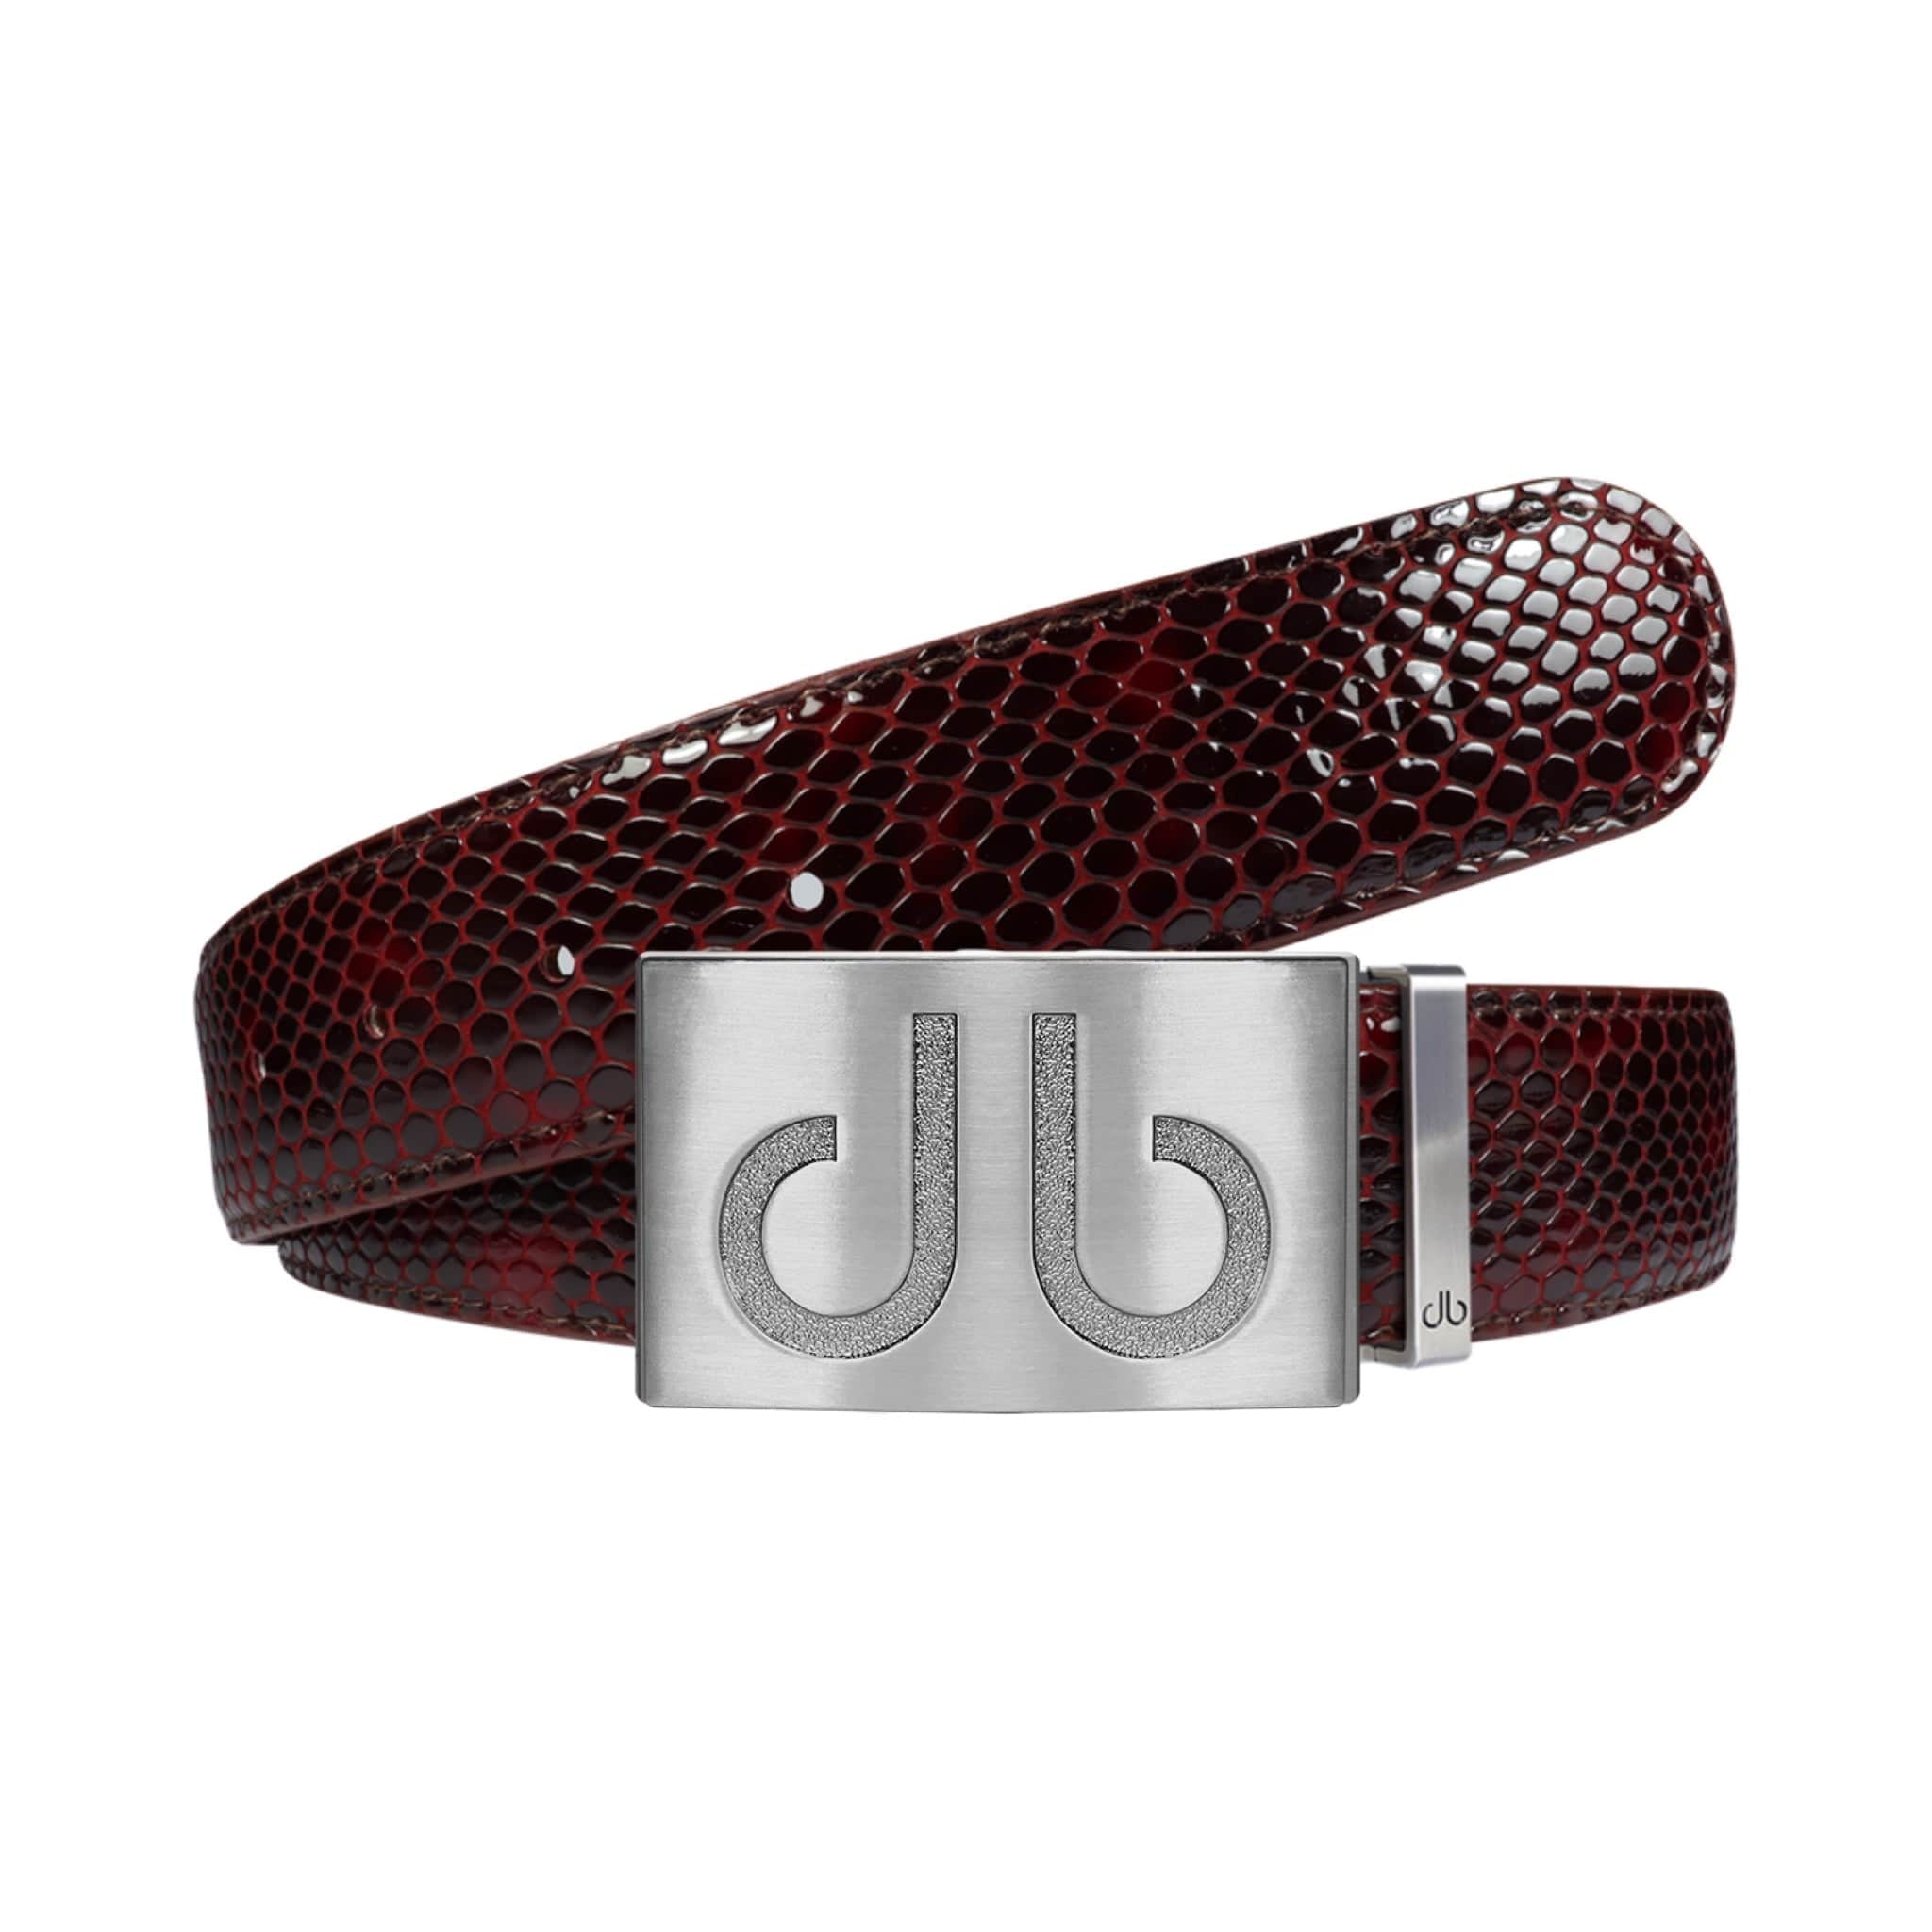 Snakeskin Leather Belts Druh Belts USA